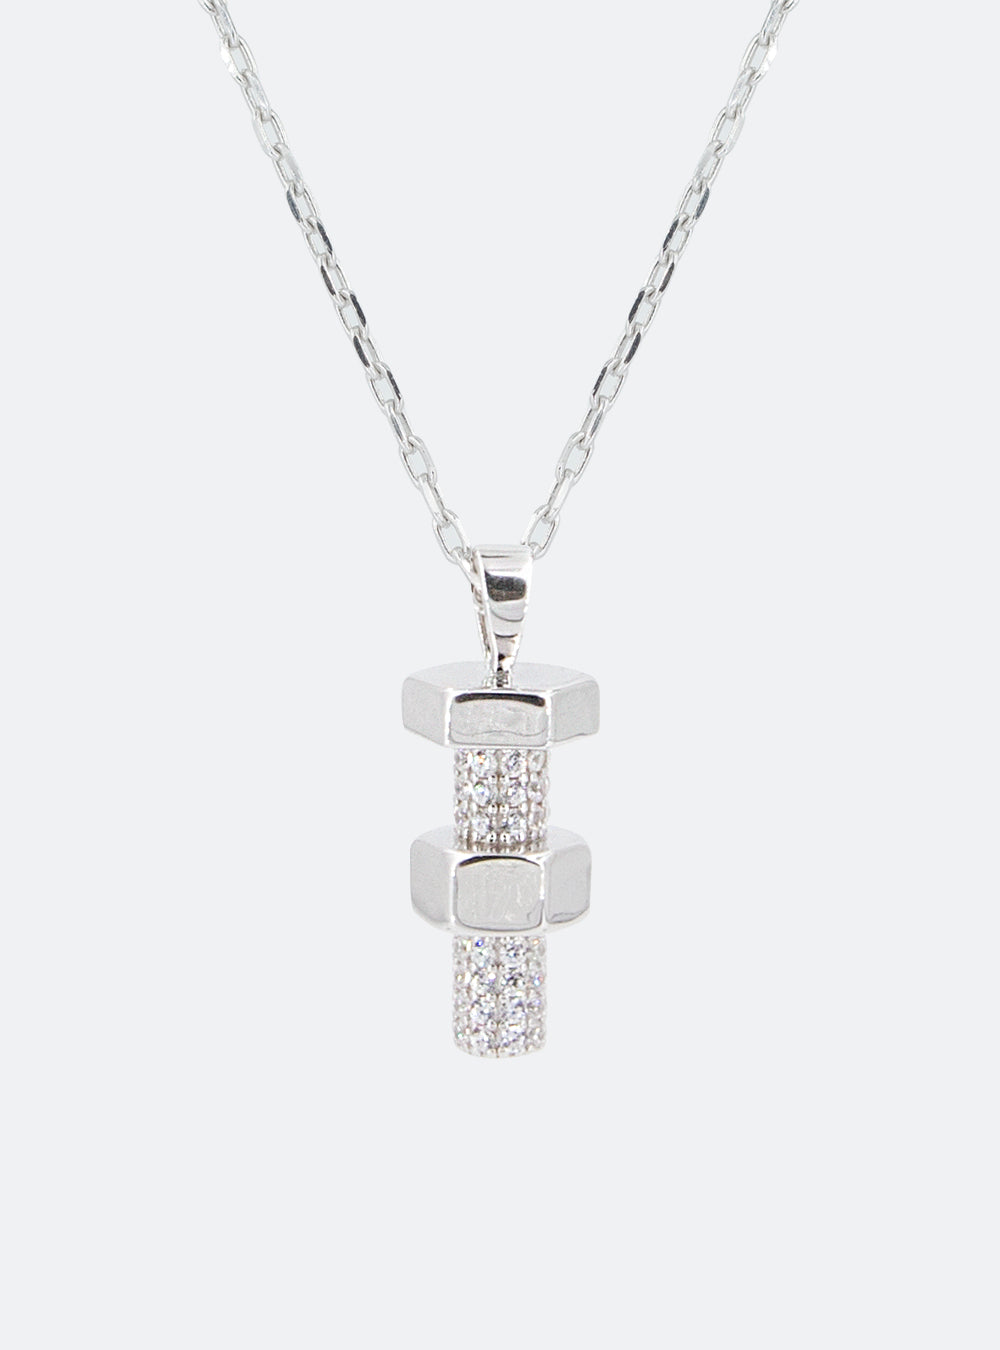 Hexbolt w/ cubic zirconia pendant necklace